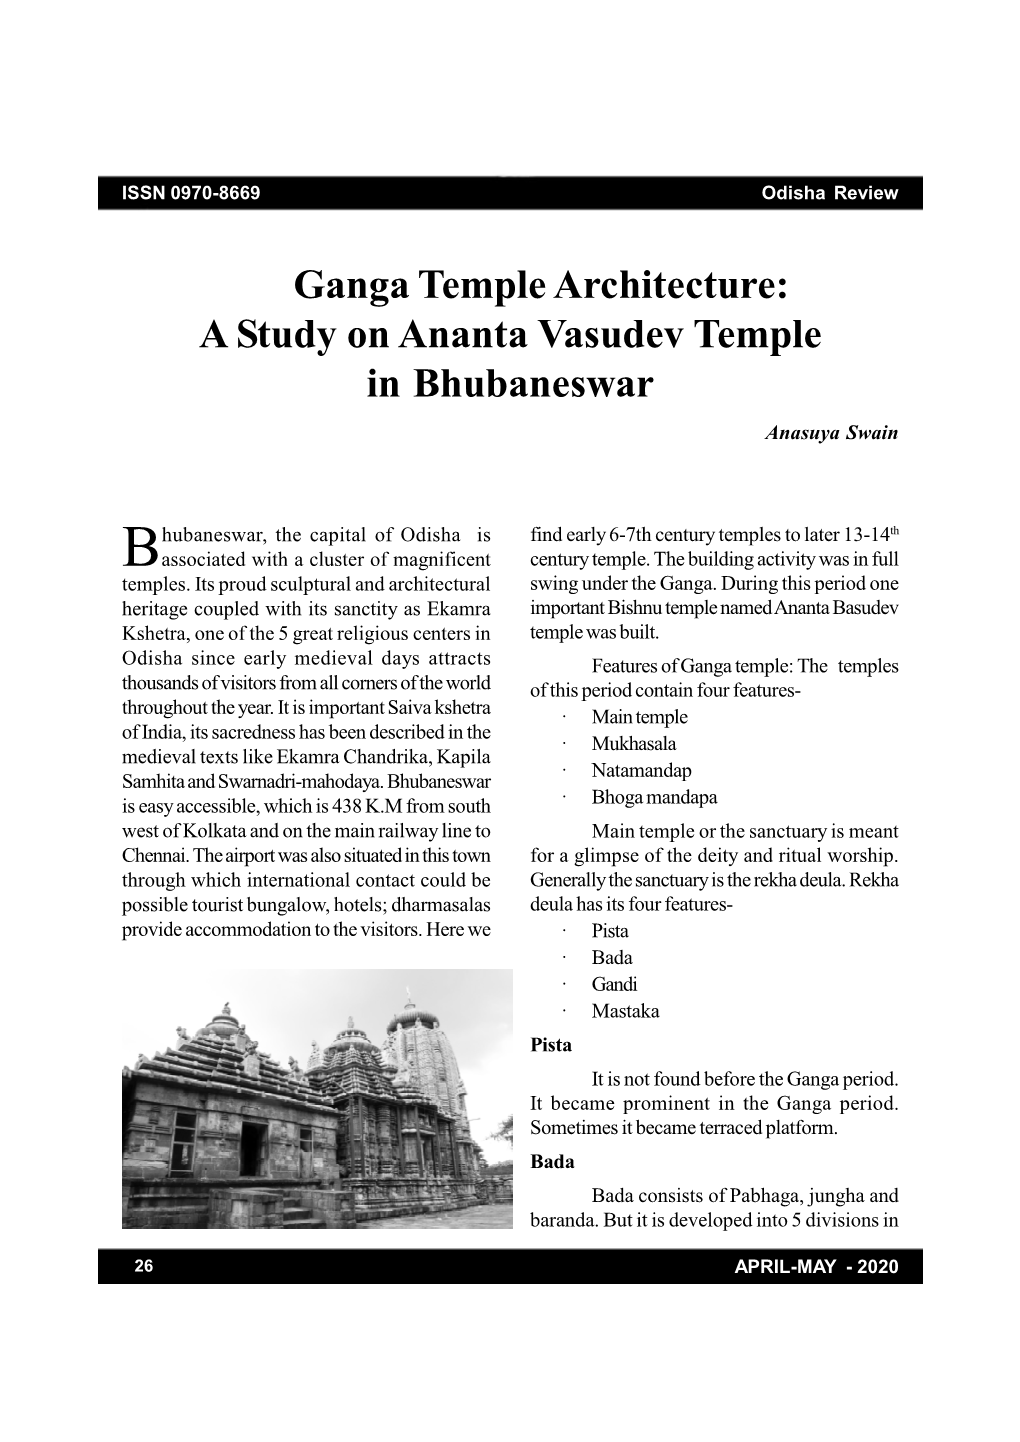 A Study on Ananta Vasudev Temple in Bhubaneswar Anasuya Swain